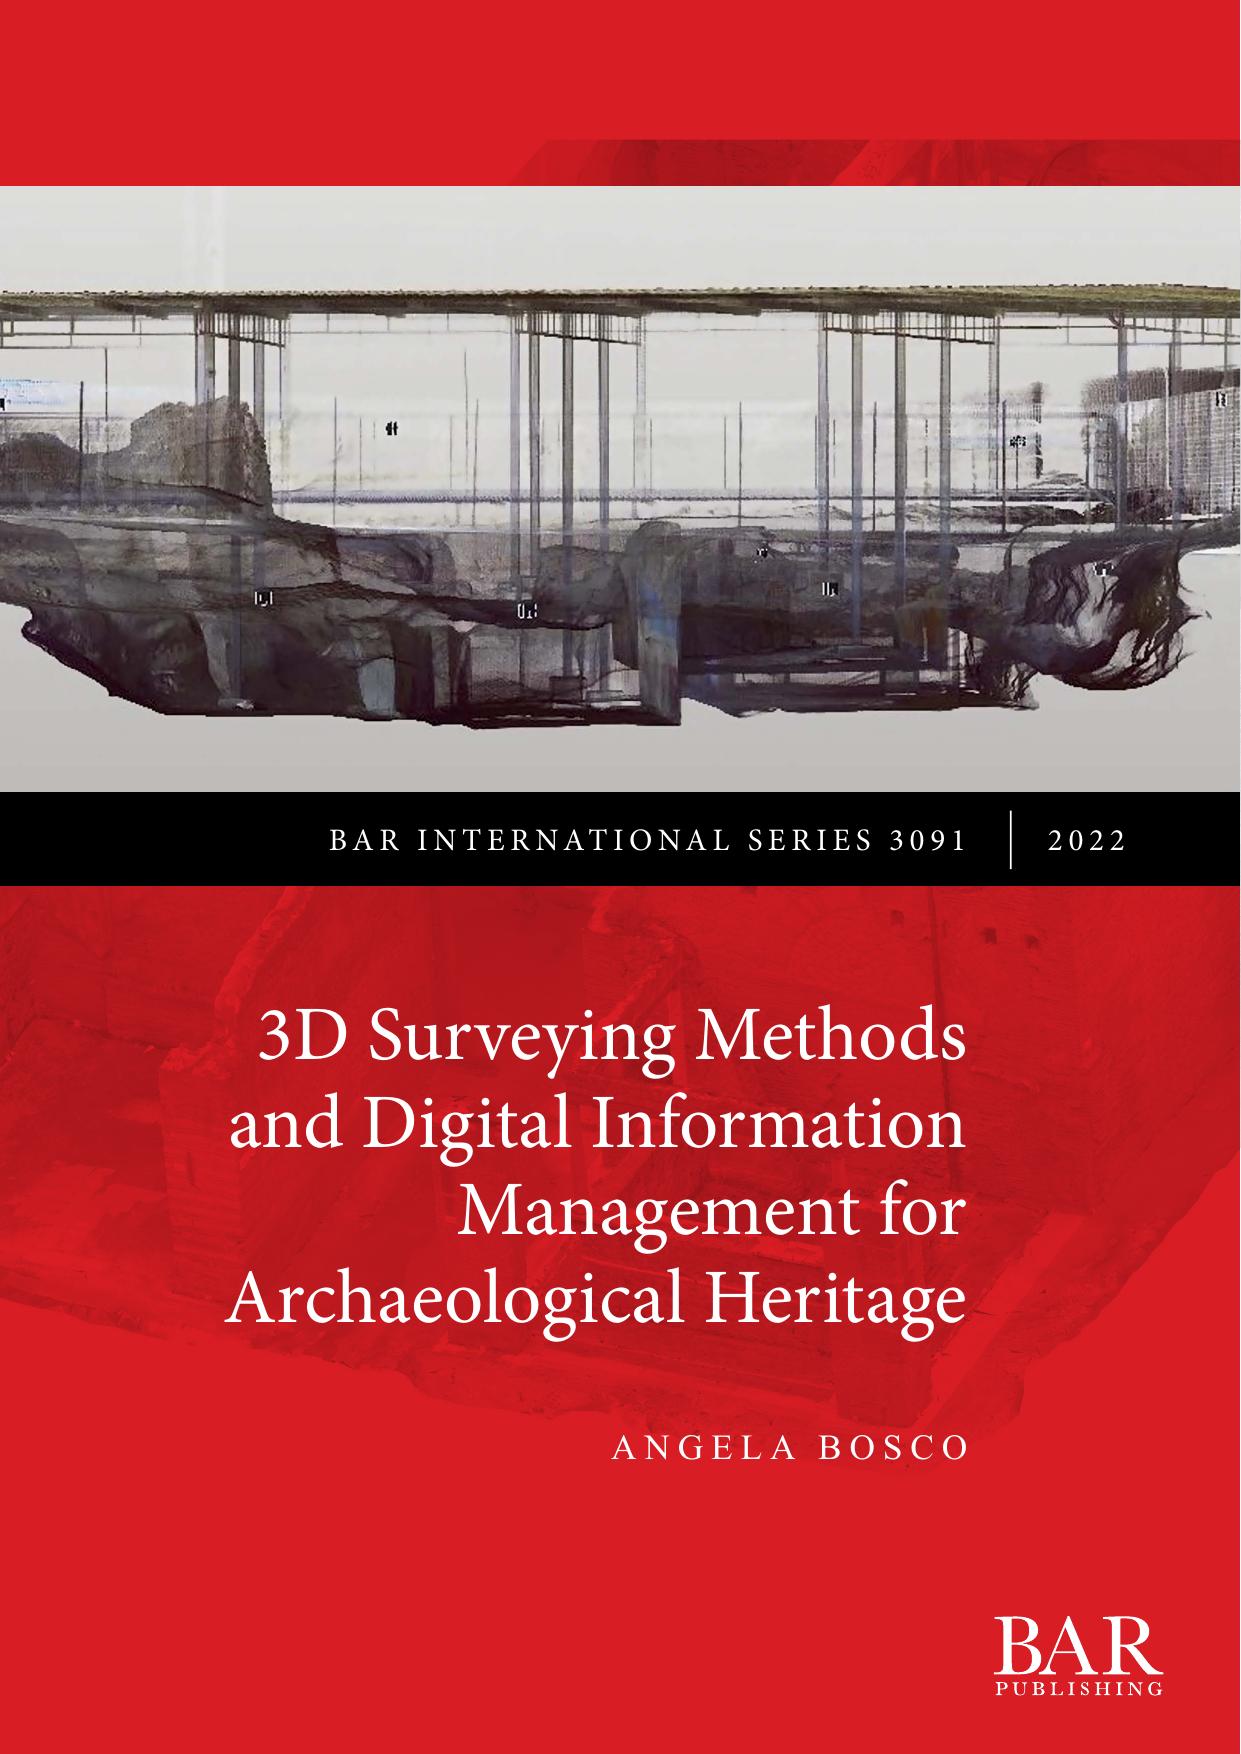 3D Surveying Methods and Digital Information Management for Archaeological Heritage 2022